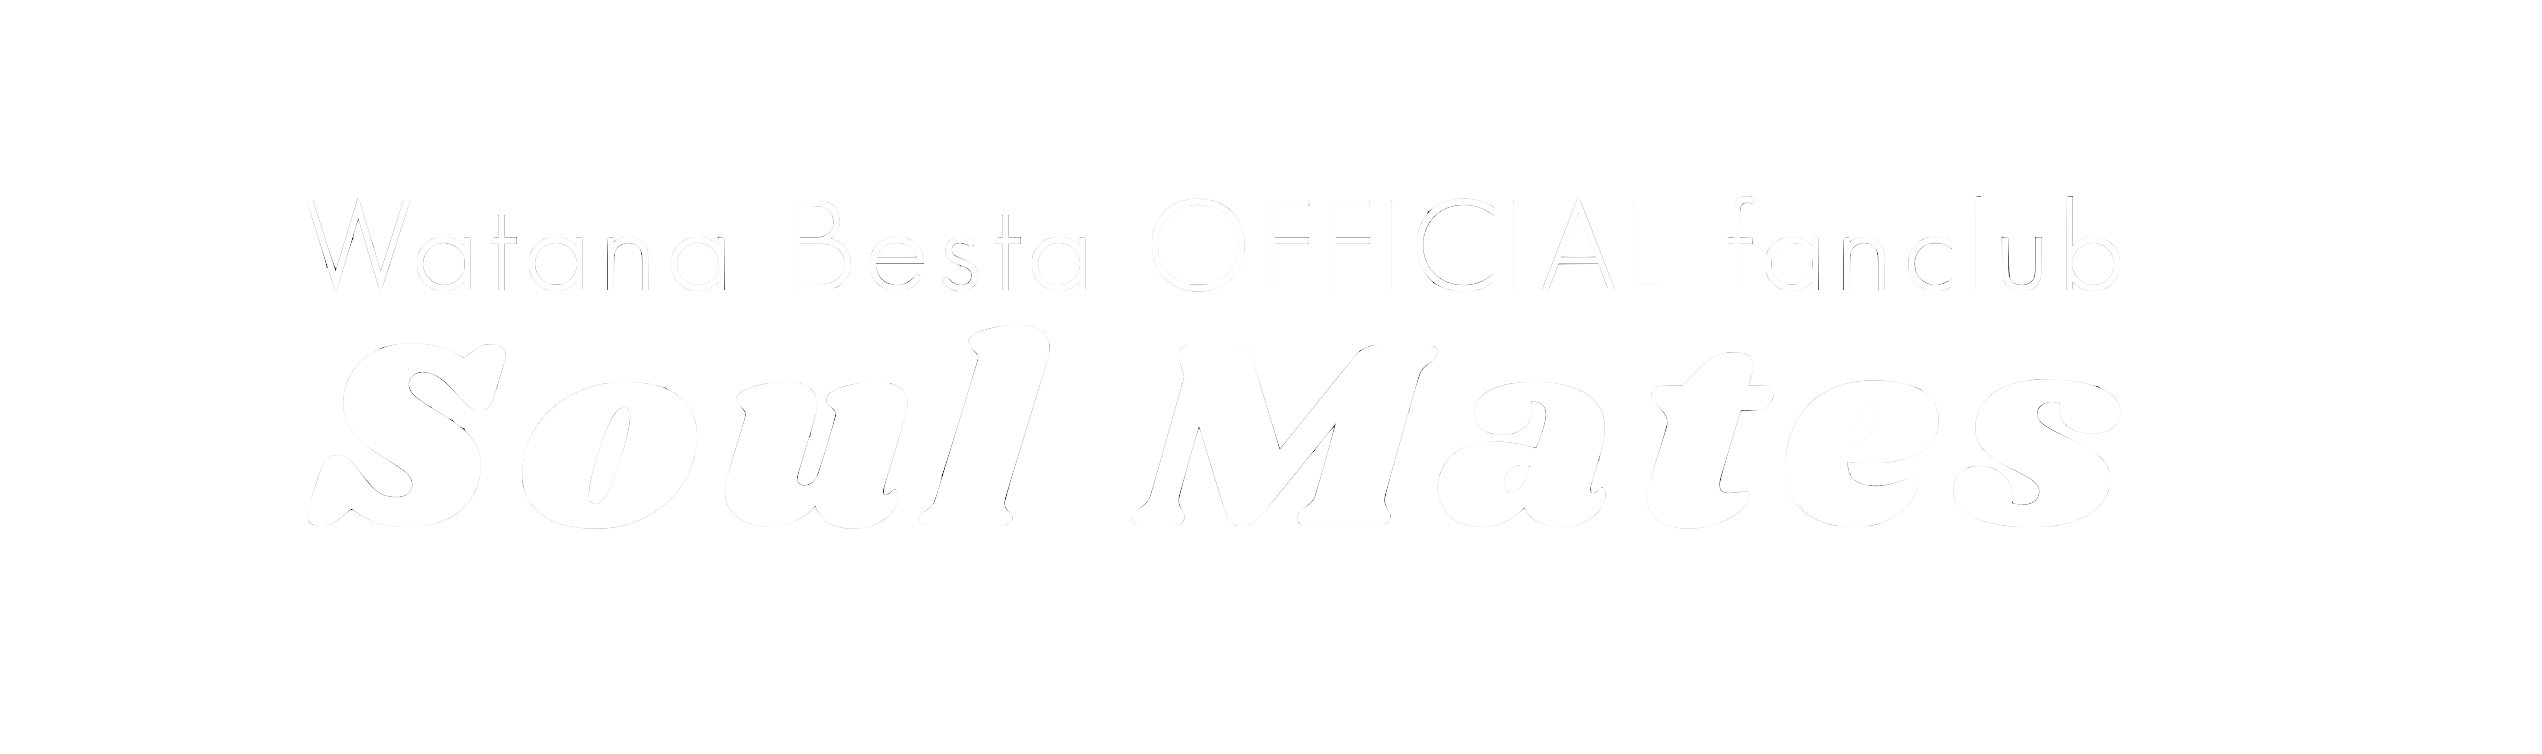 Watana Besta OFFICIAL fanclub "Soul Mates"